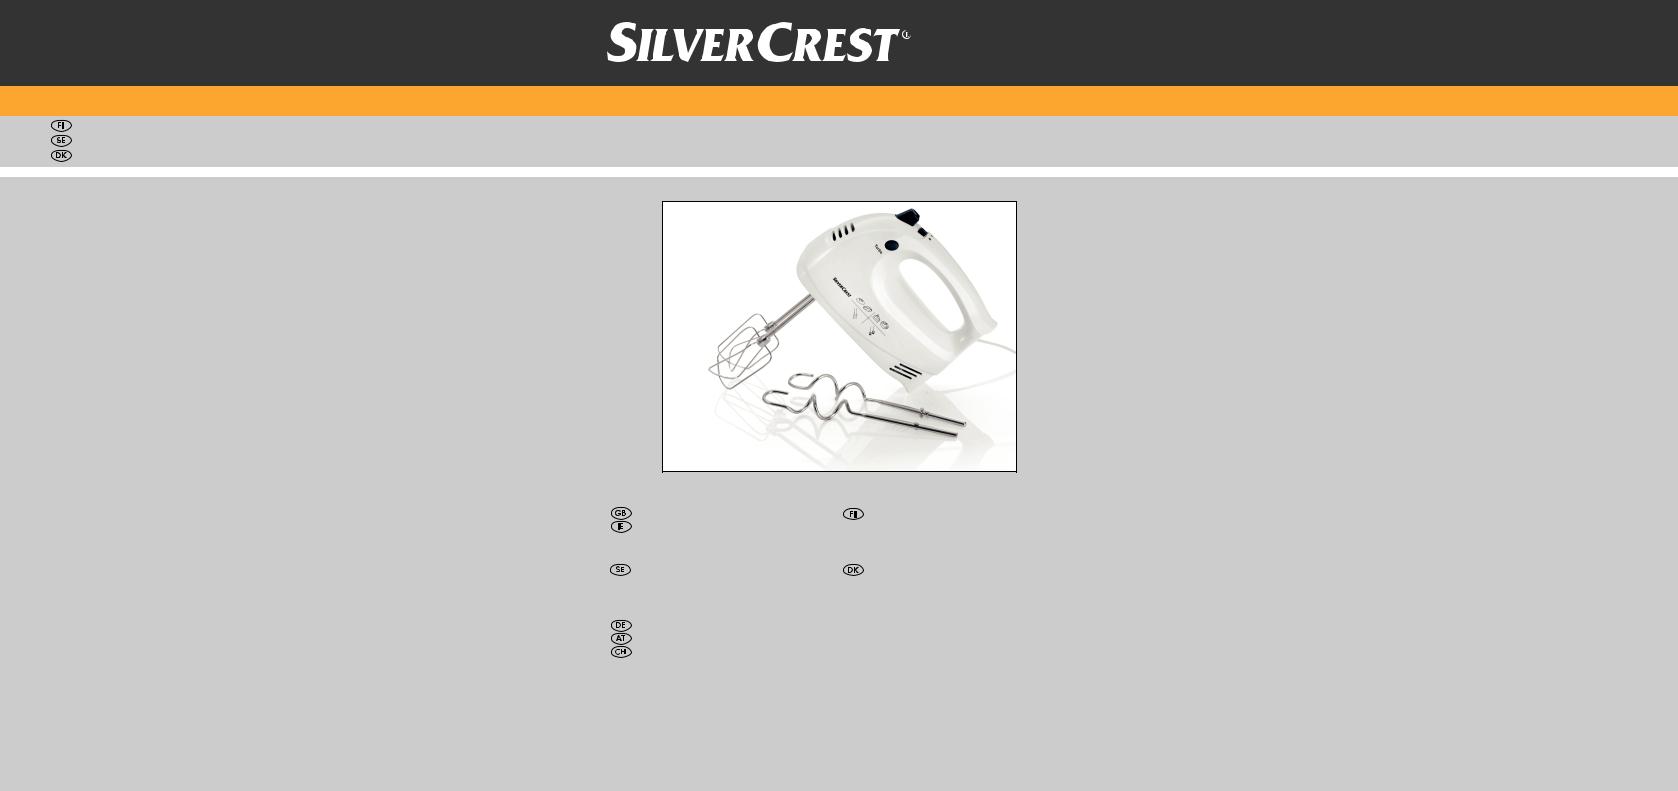 SilverCrest SHM 300 A1 User Manual